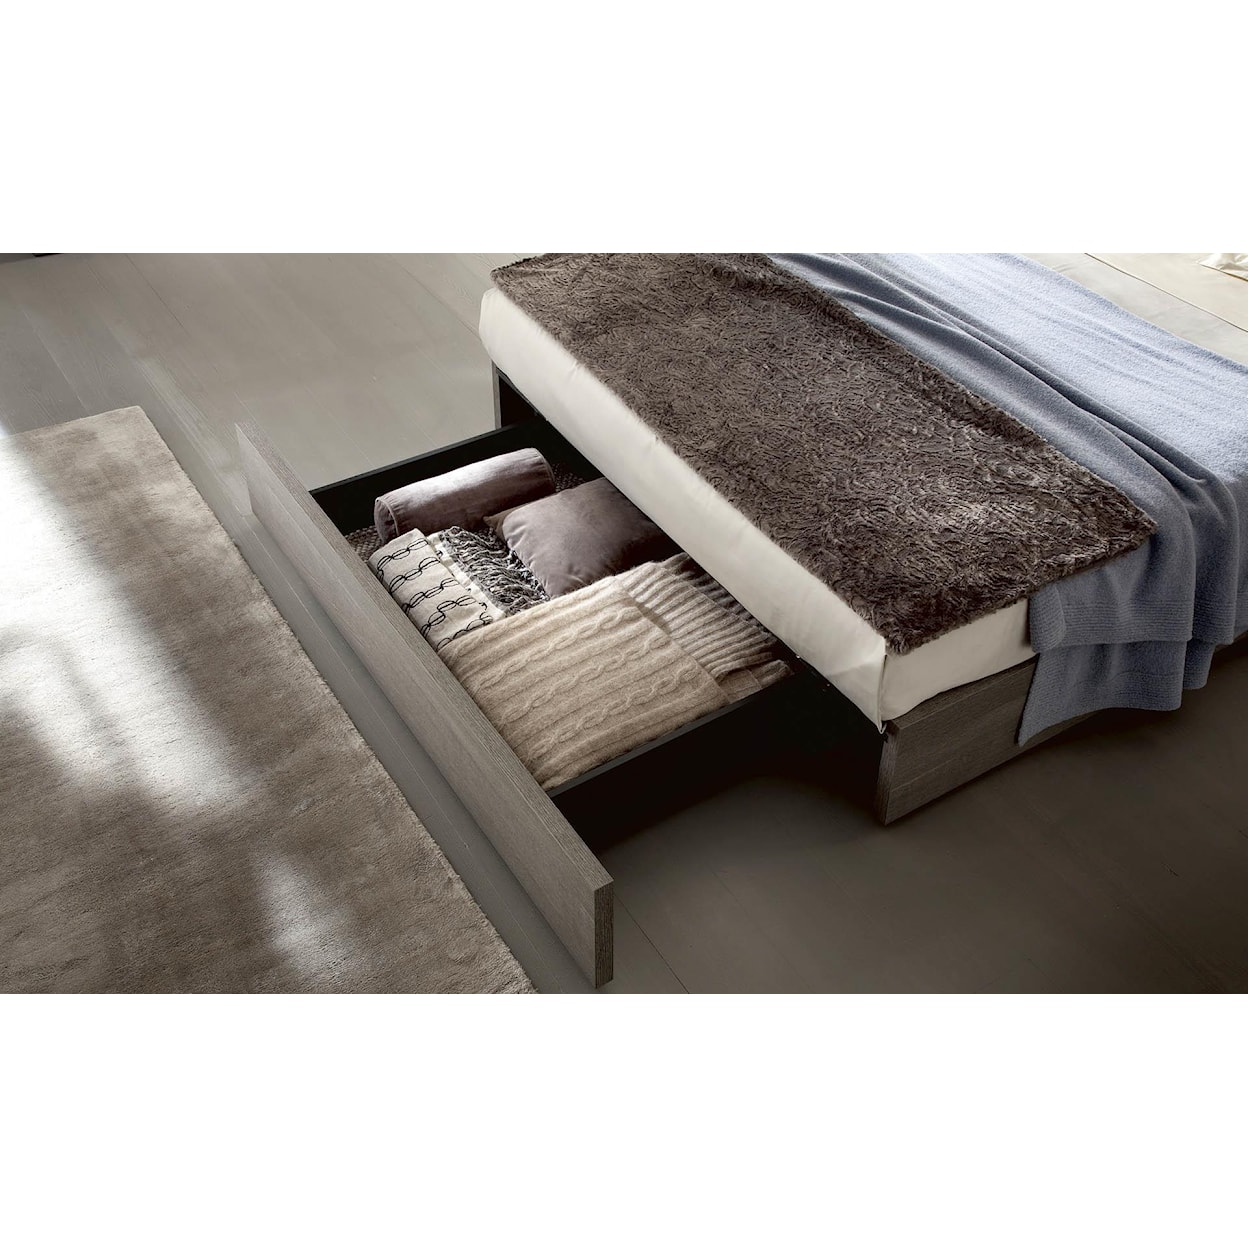 Alf Italia Tivoli CK Bed with Storage Drawer